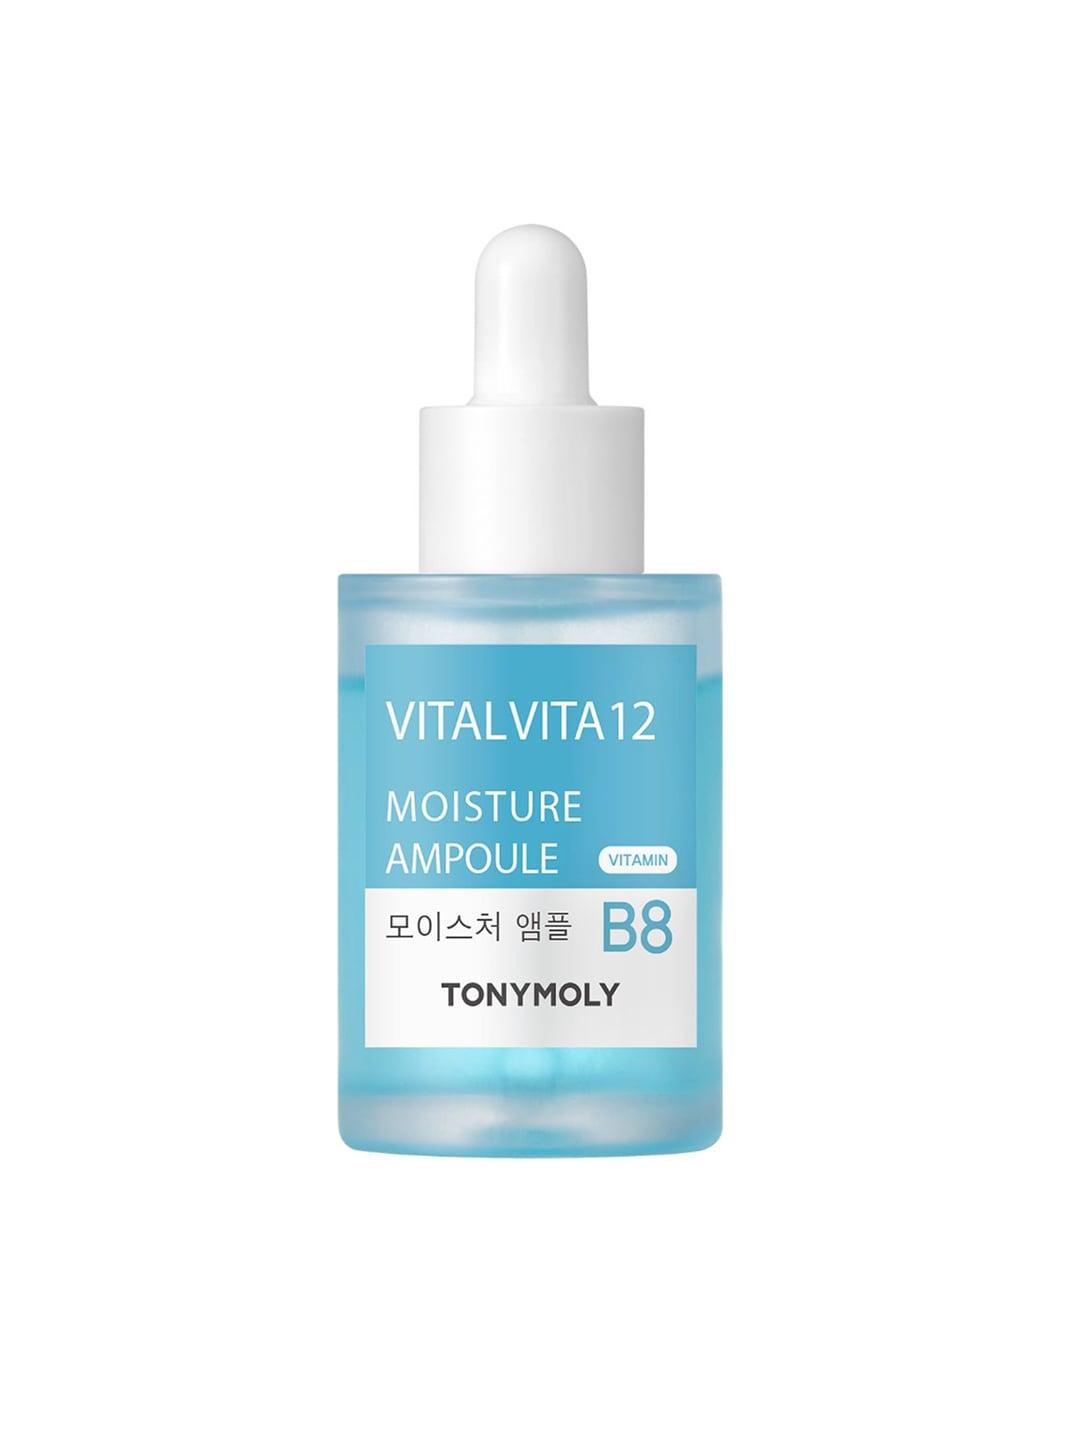 TONYMOLY Vital Vita 12 Vitamin B8 Moisture Ampoule 30ml